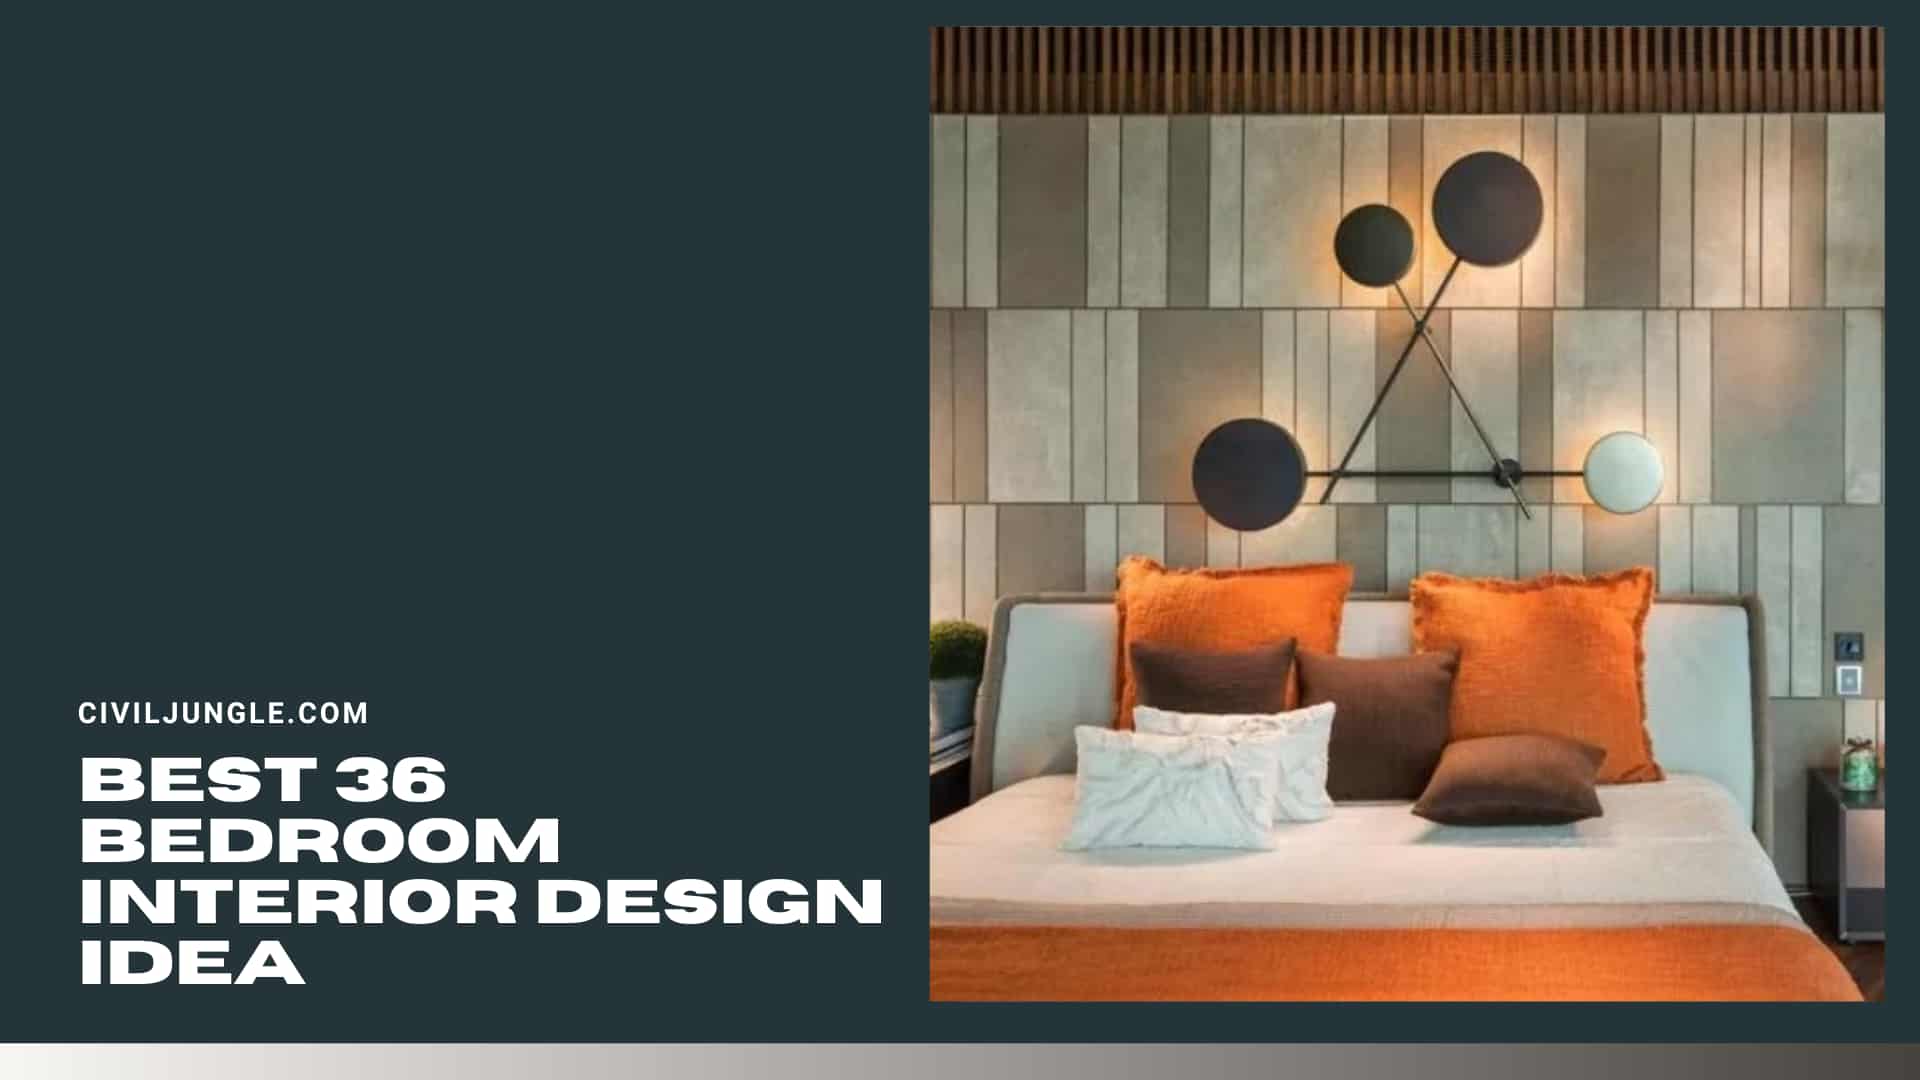 Best 36 Bedroom Interior Design Idea